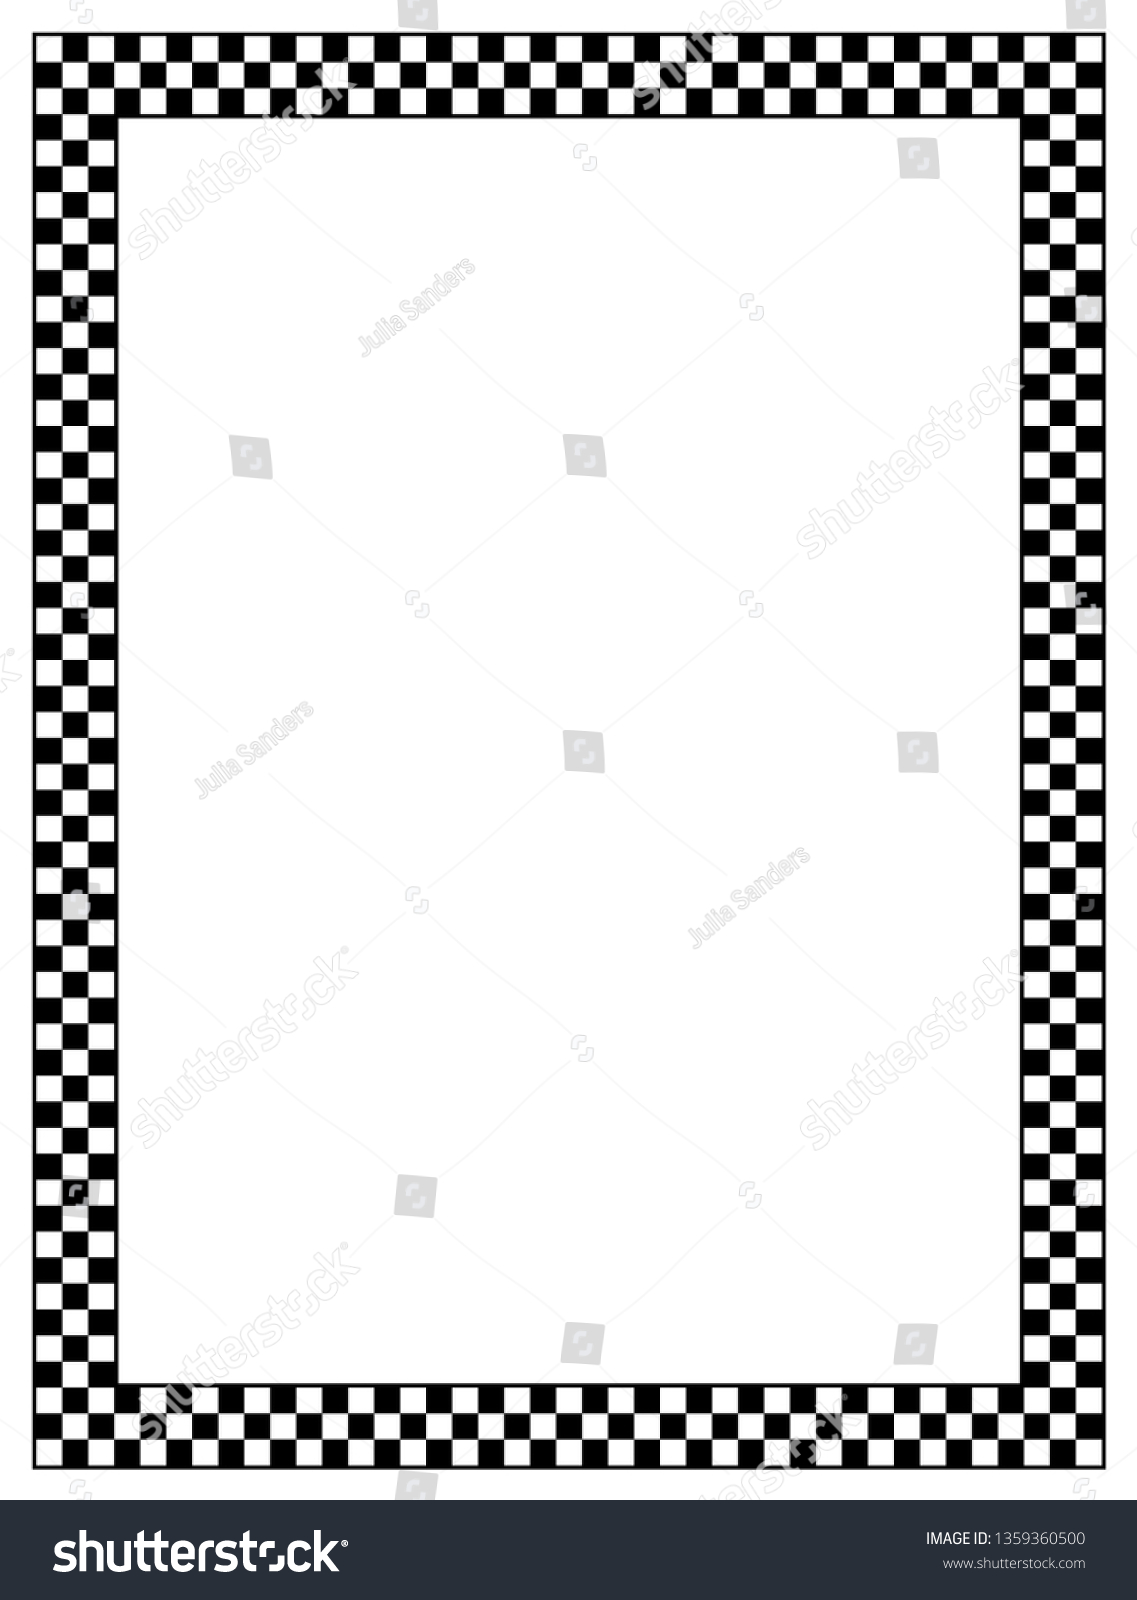 535 Checkered flag border Stock Illustrations, Images & Vectors ...